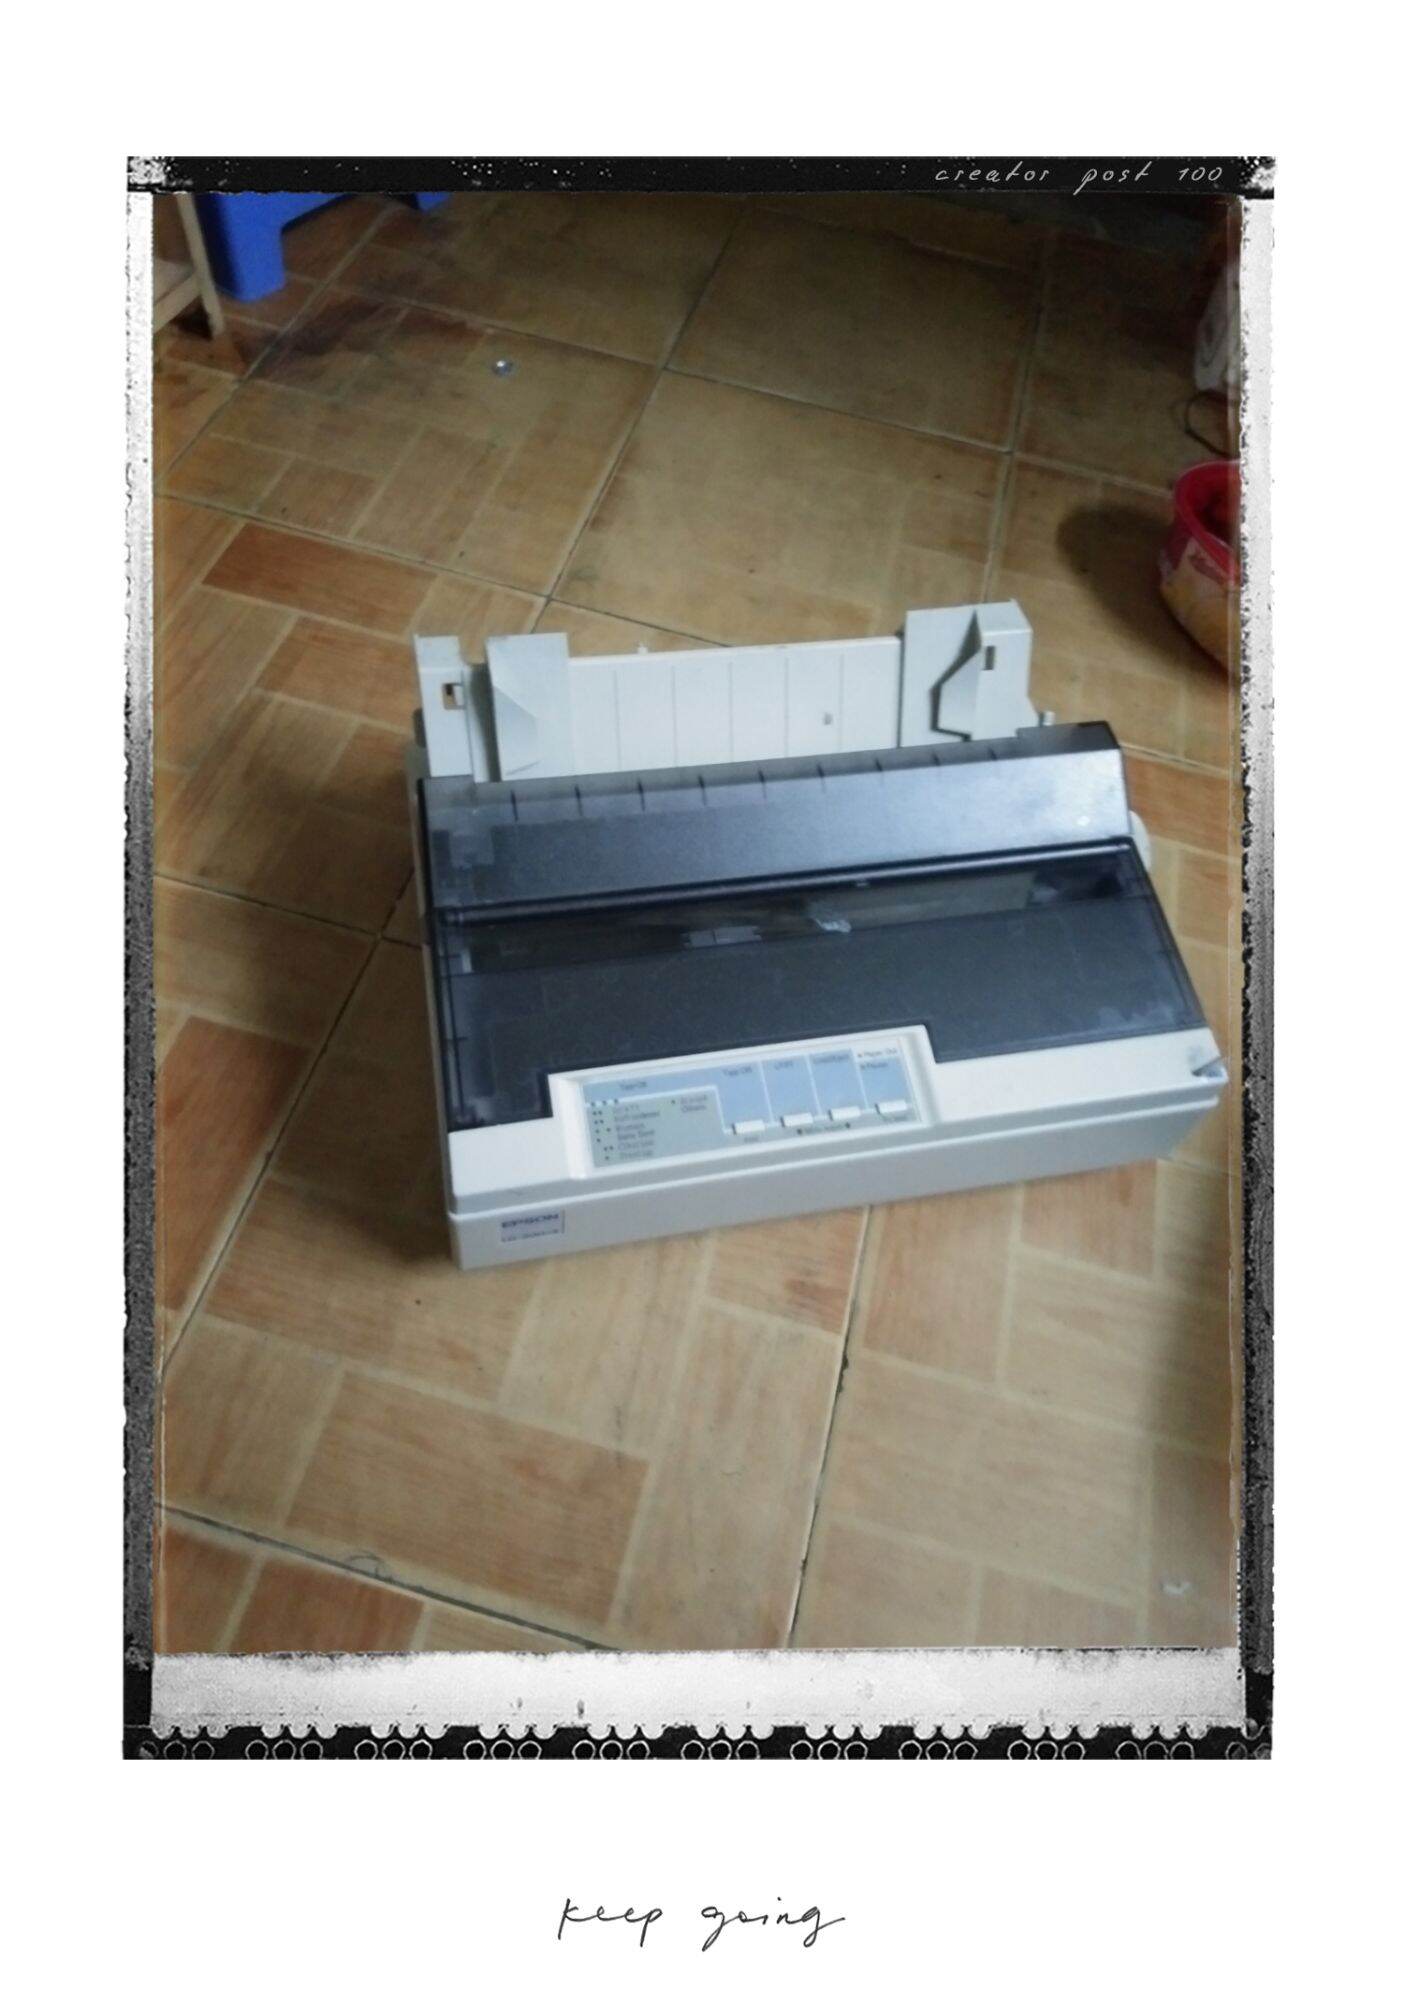 Máy in kim Epson LQ300+II, máy scan hình xăm